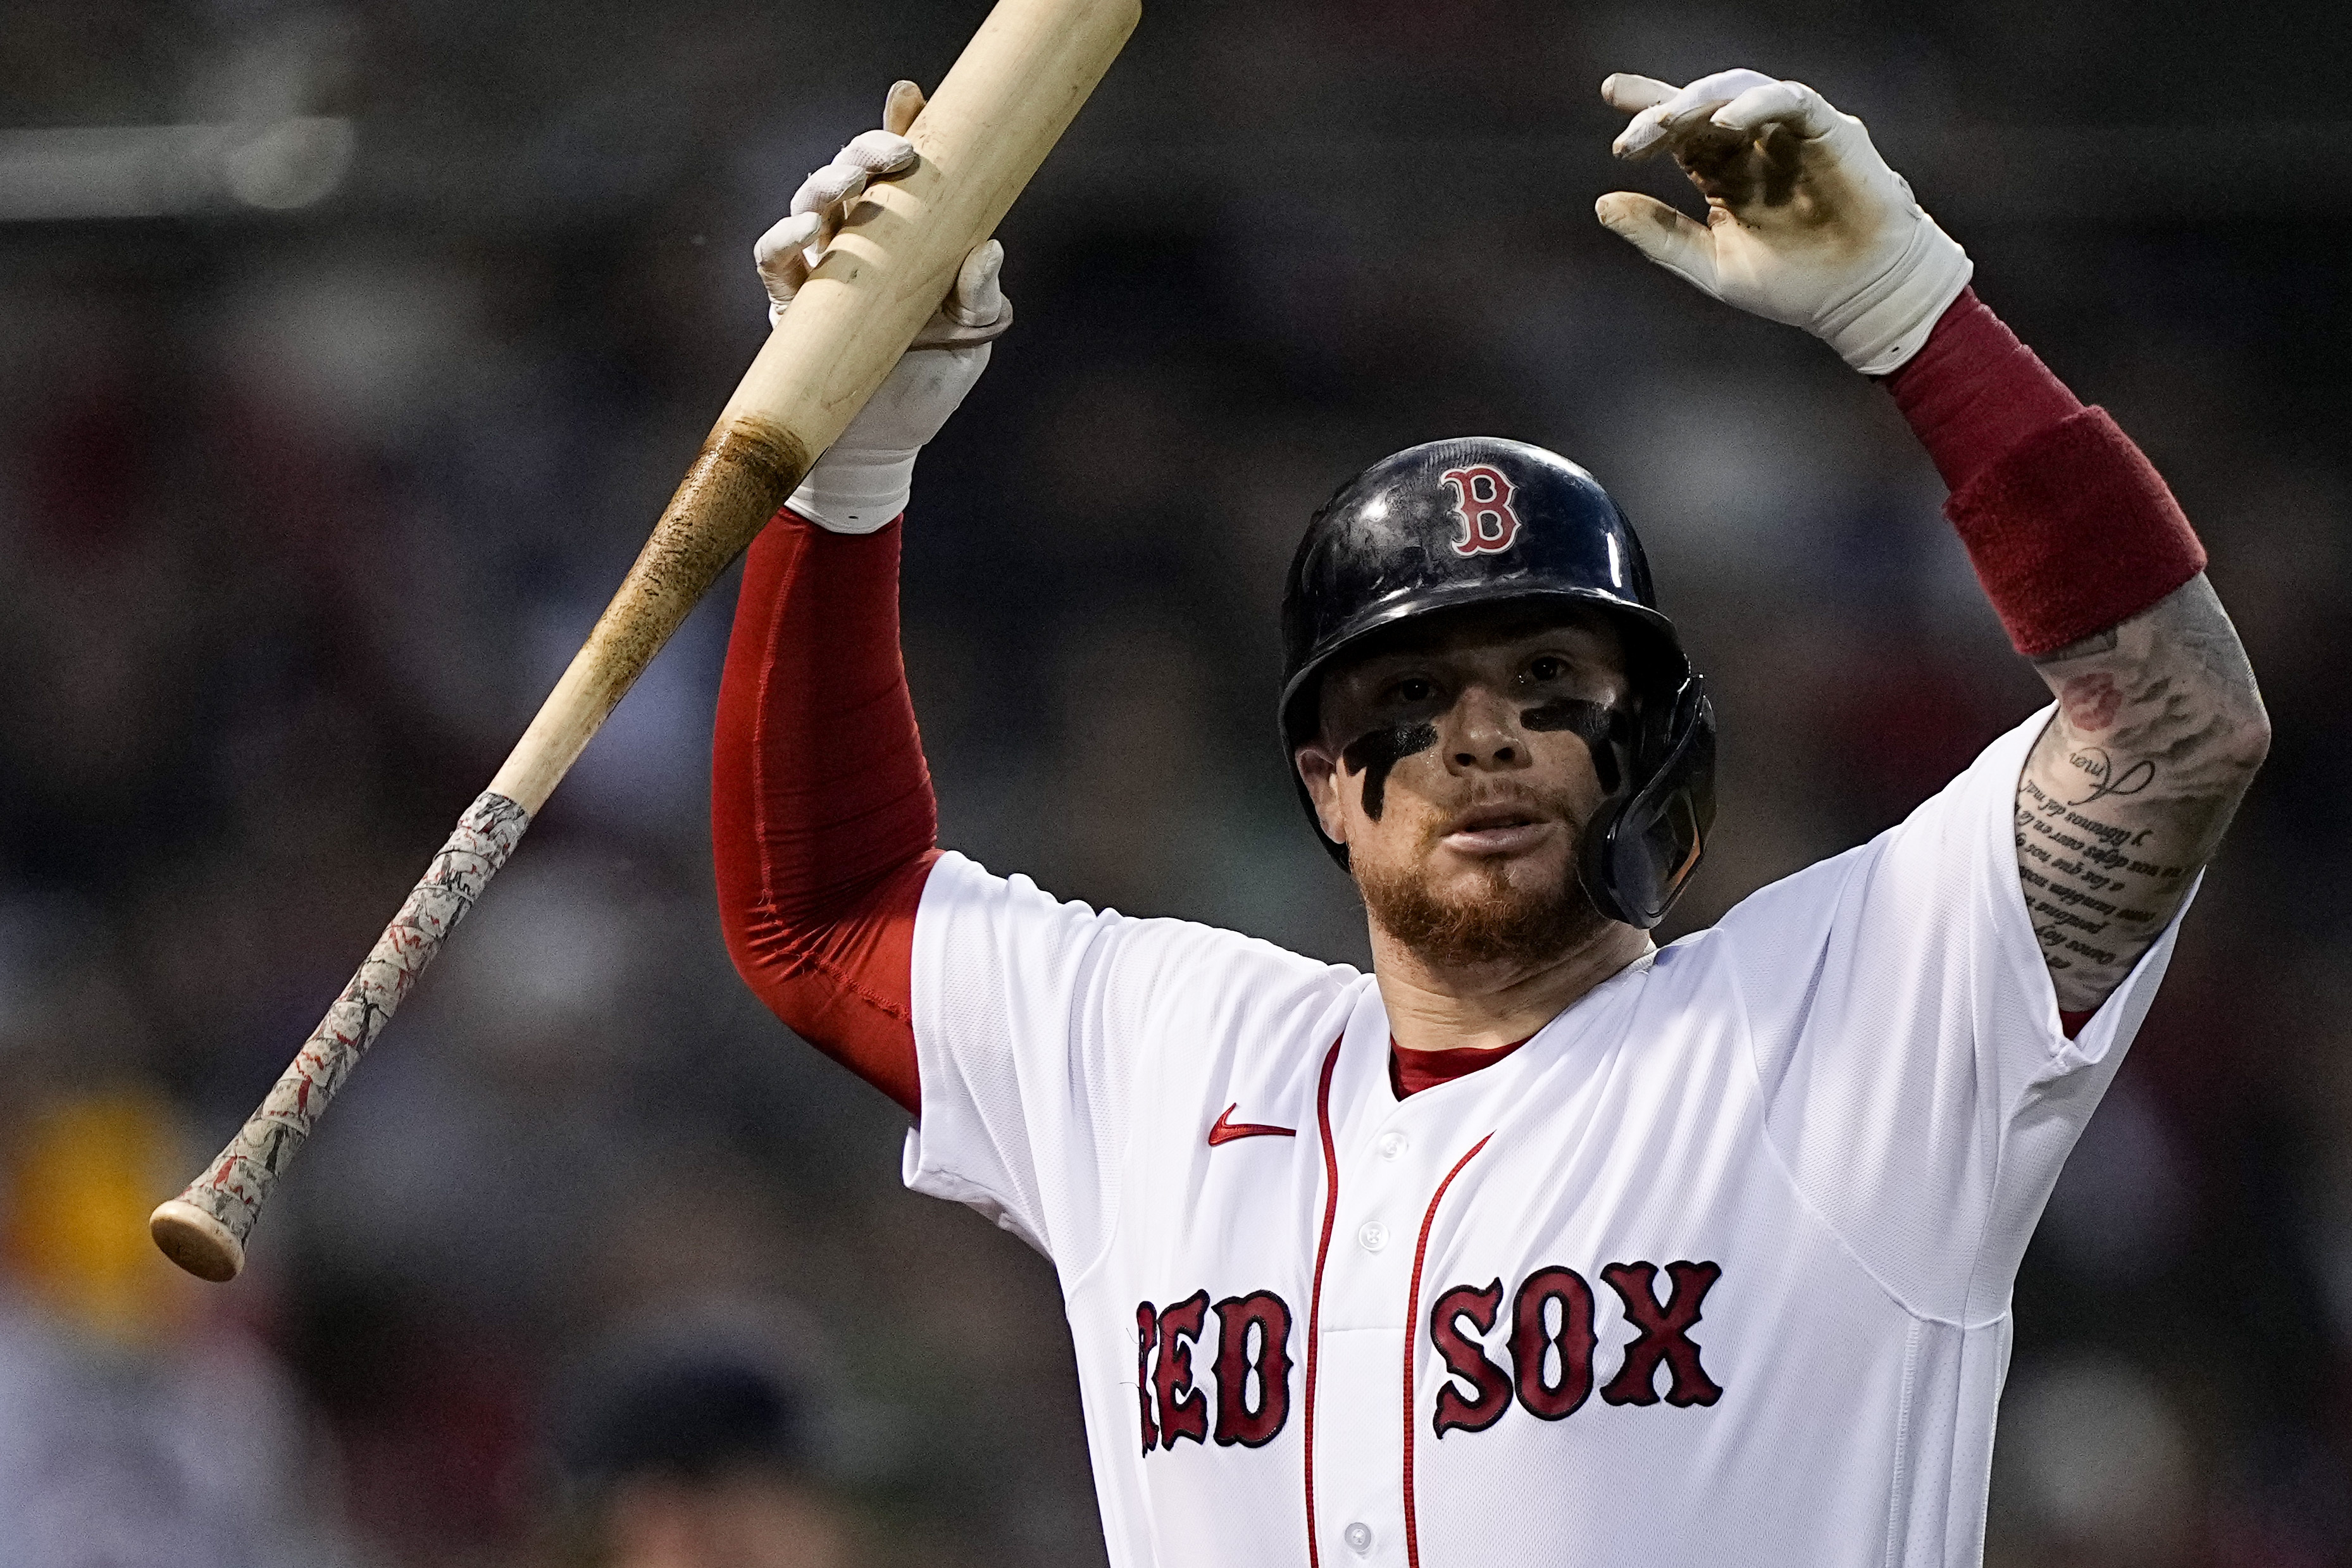 Alex Binelas excited to start Red Sox tenure